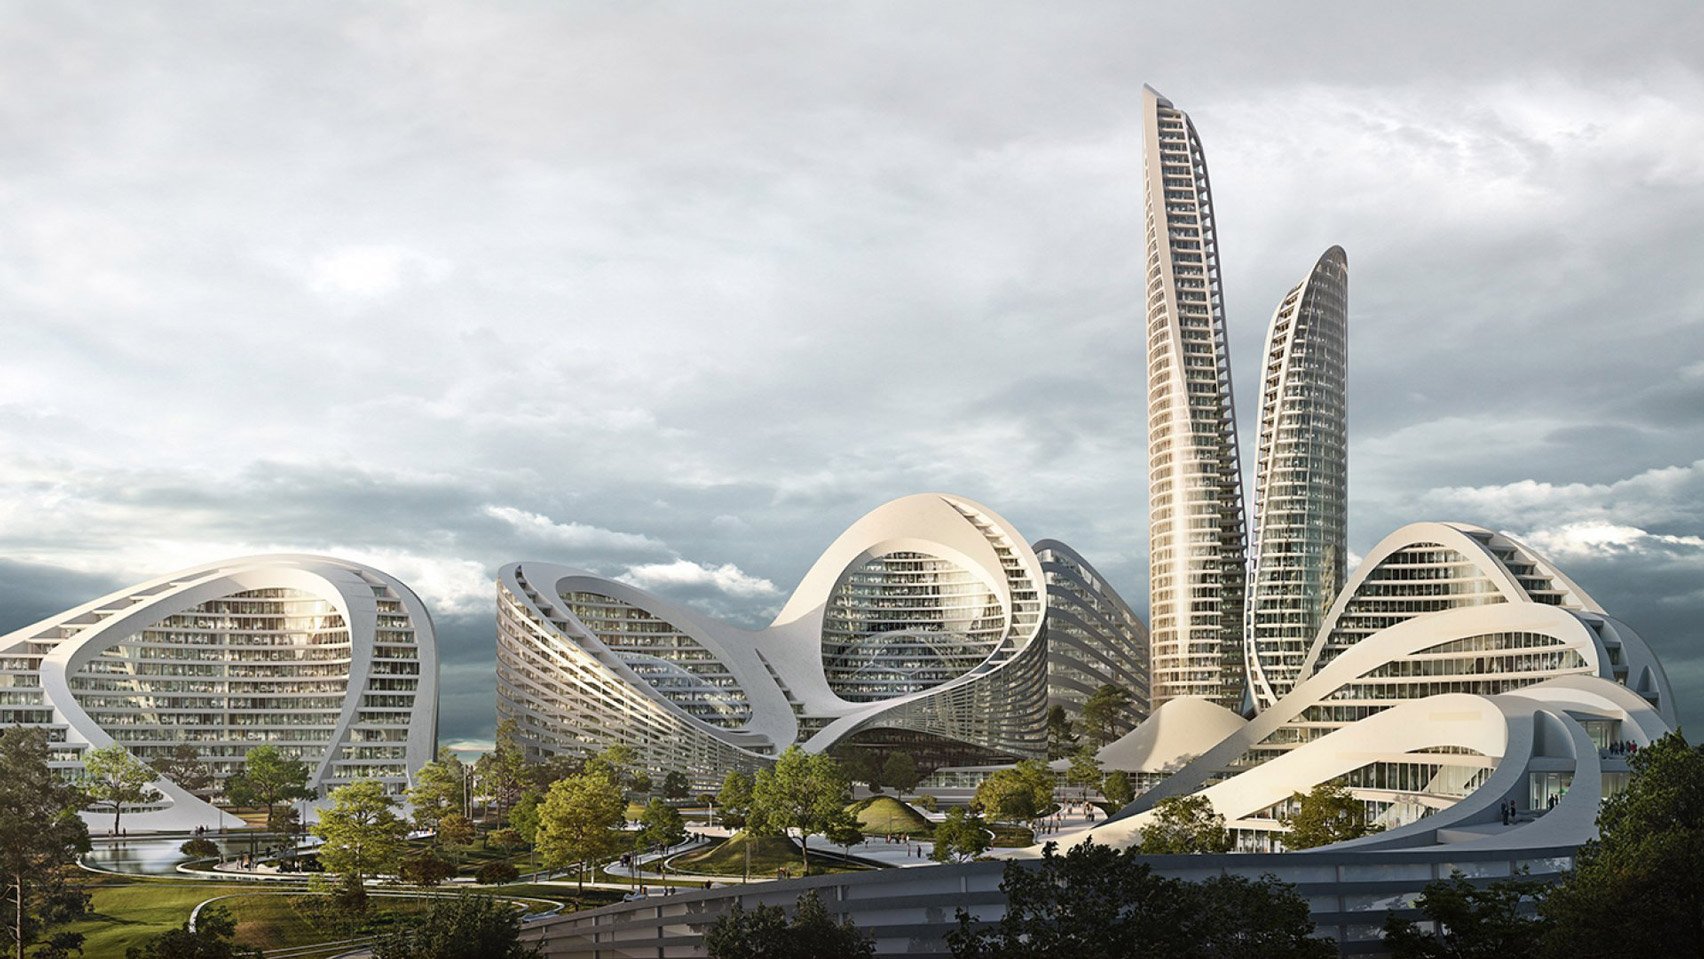 More information about "Οι Zaha Hadid Architects σχεδιάζουν νέα συνοικία στη Μόσχα"